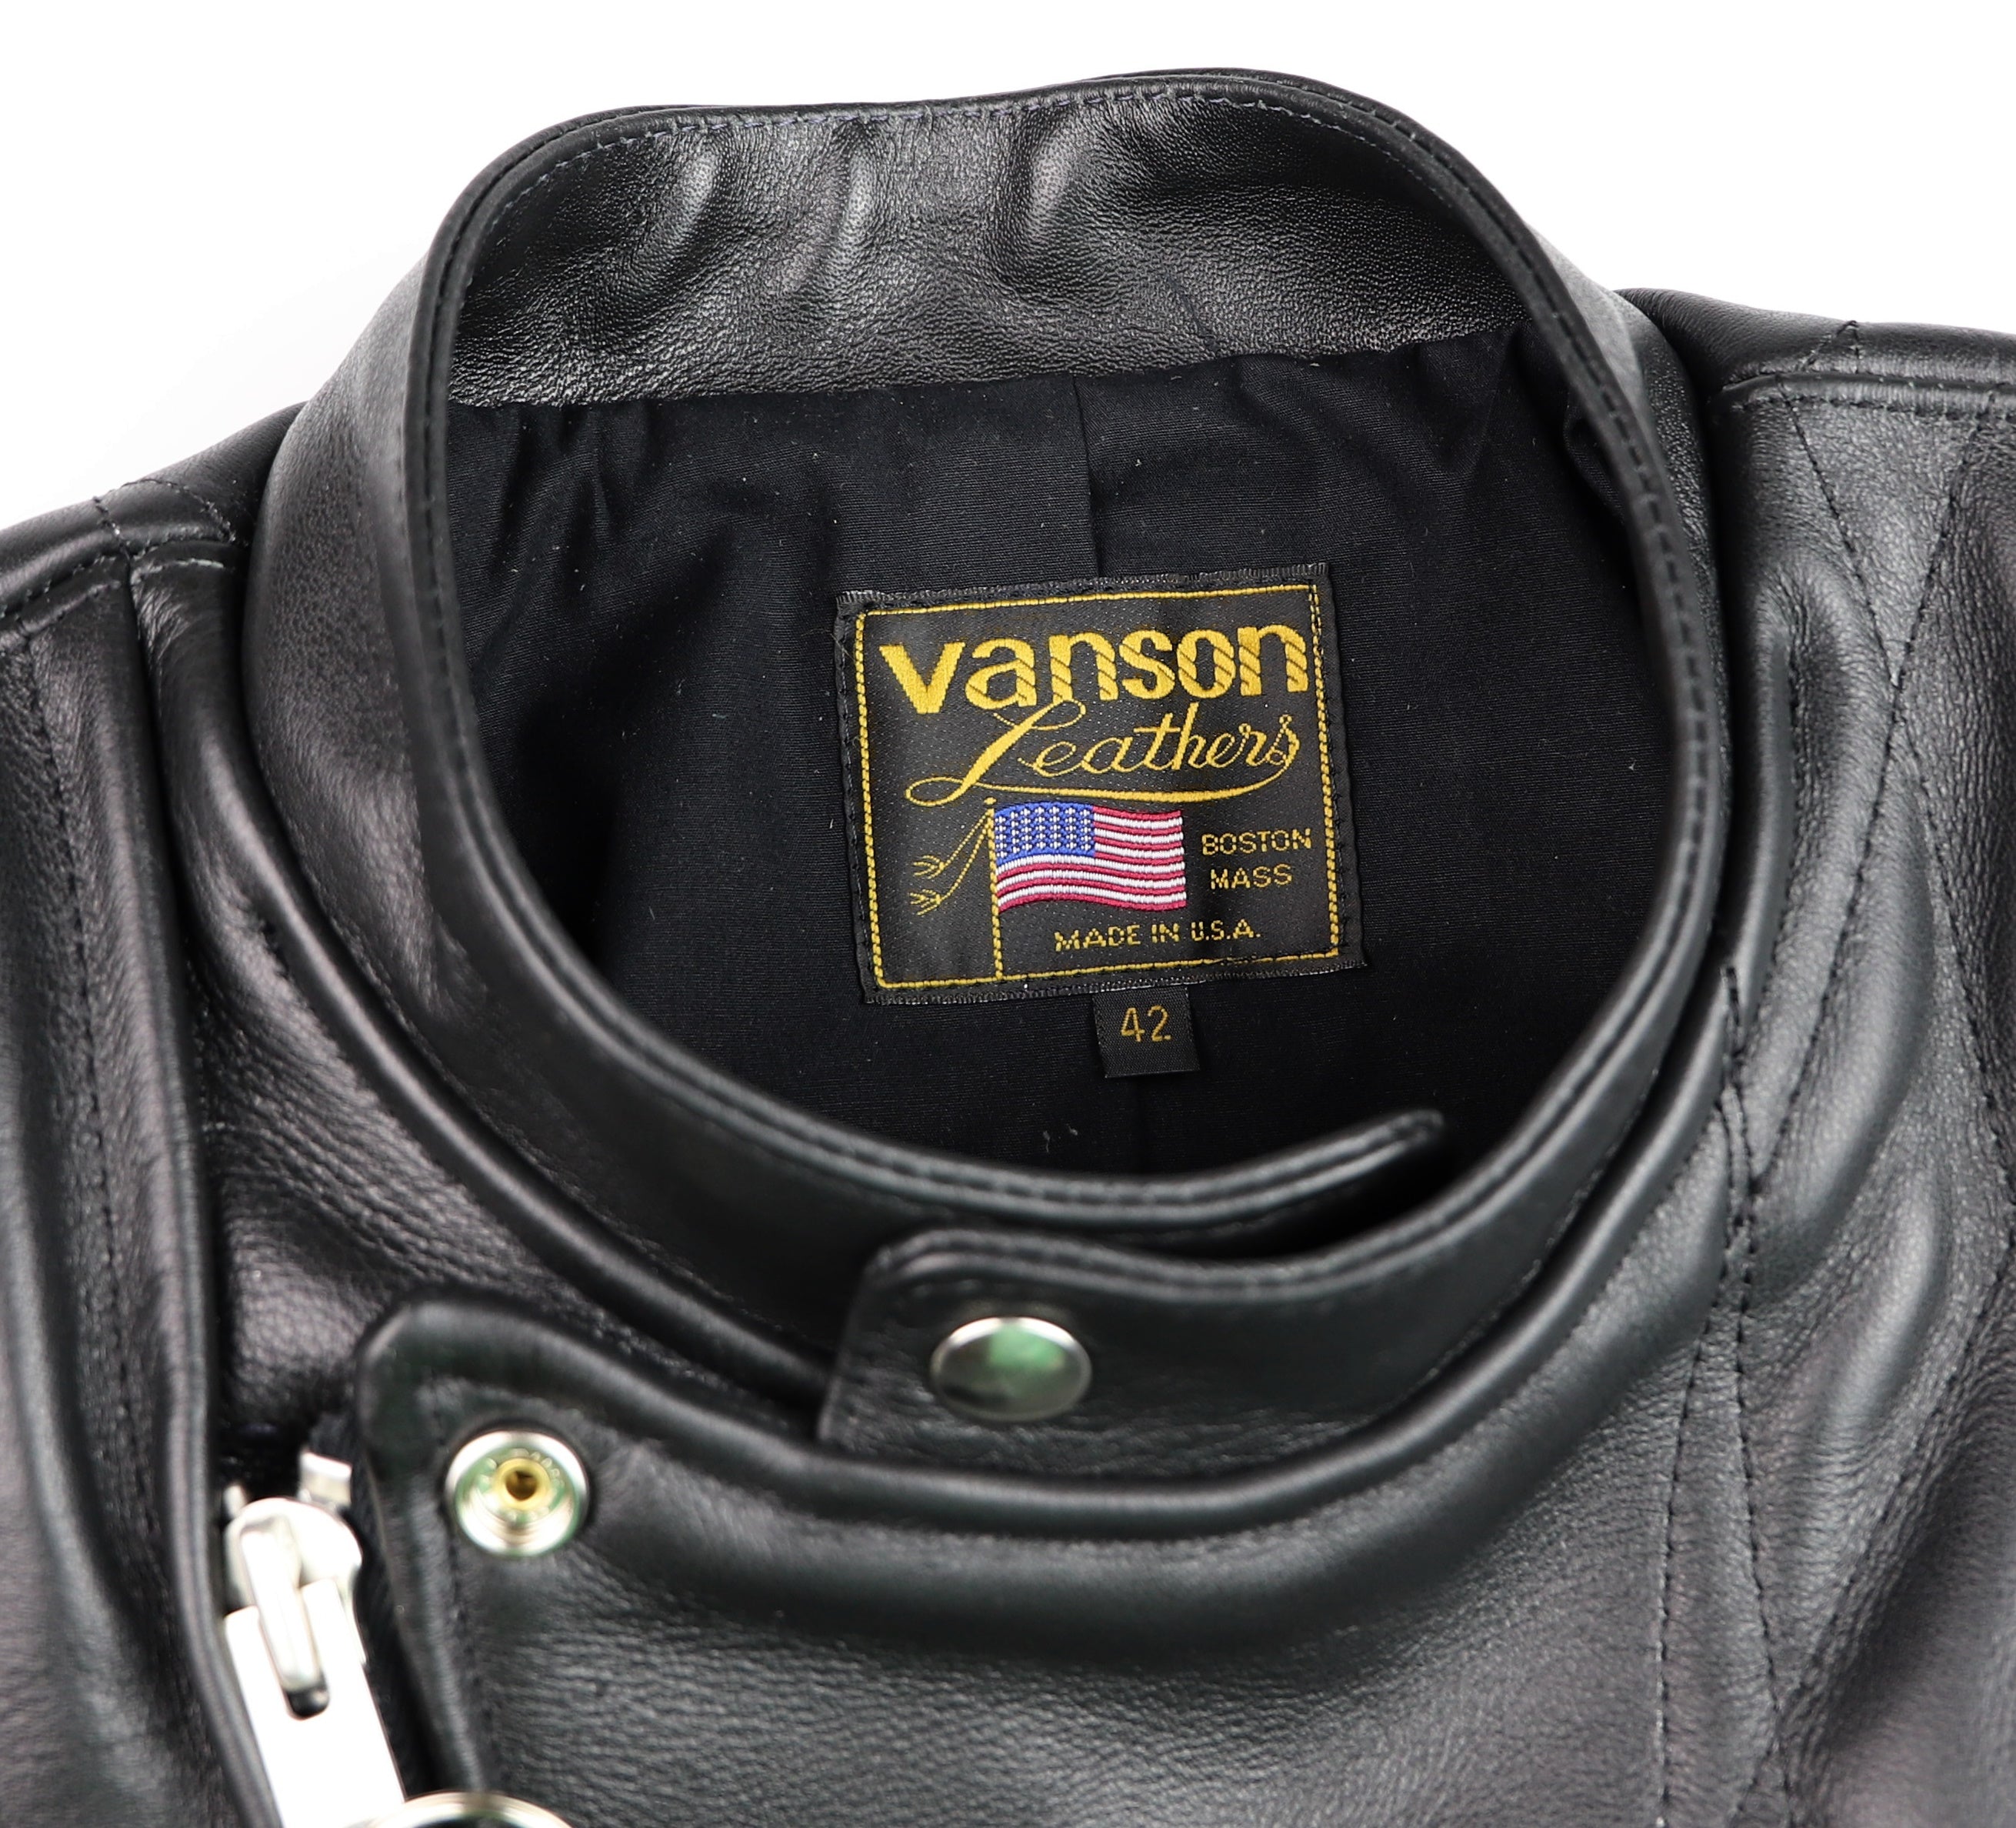 Vanson Chopper Jacket, Black Comp. Weight Cowhide, size 42